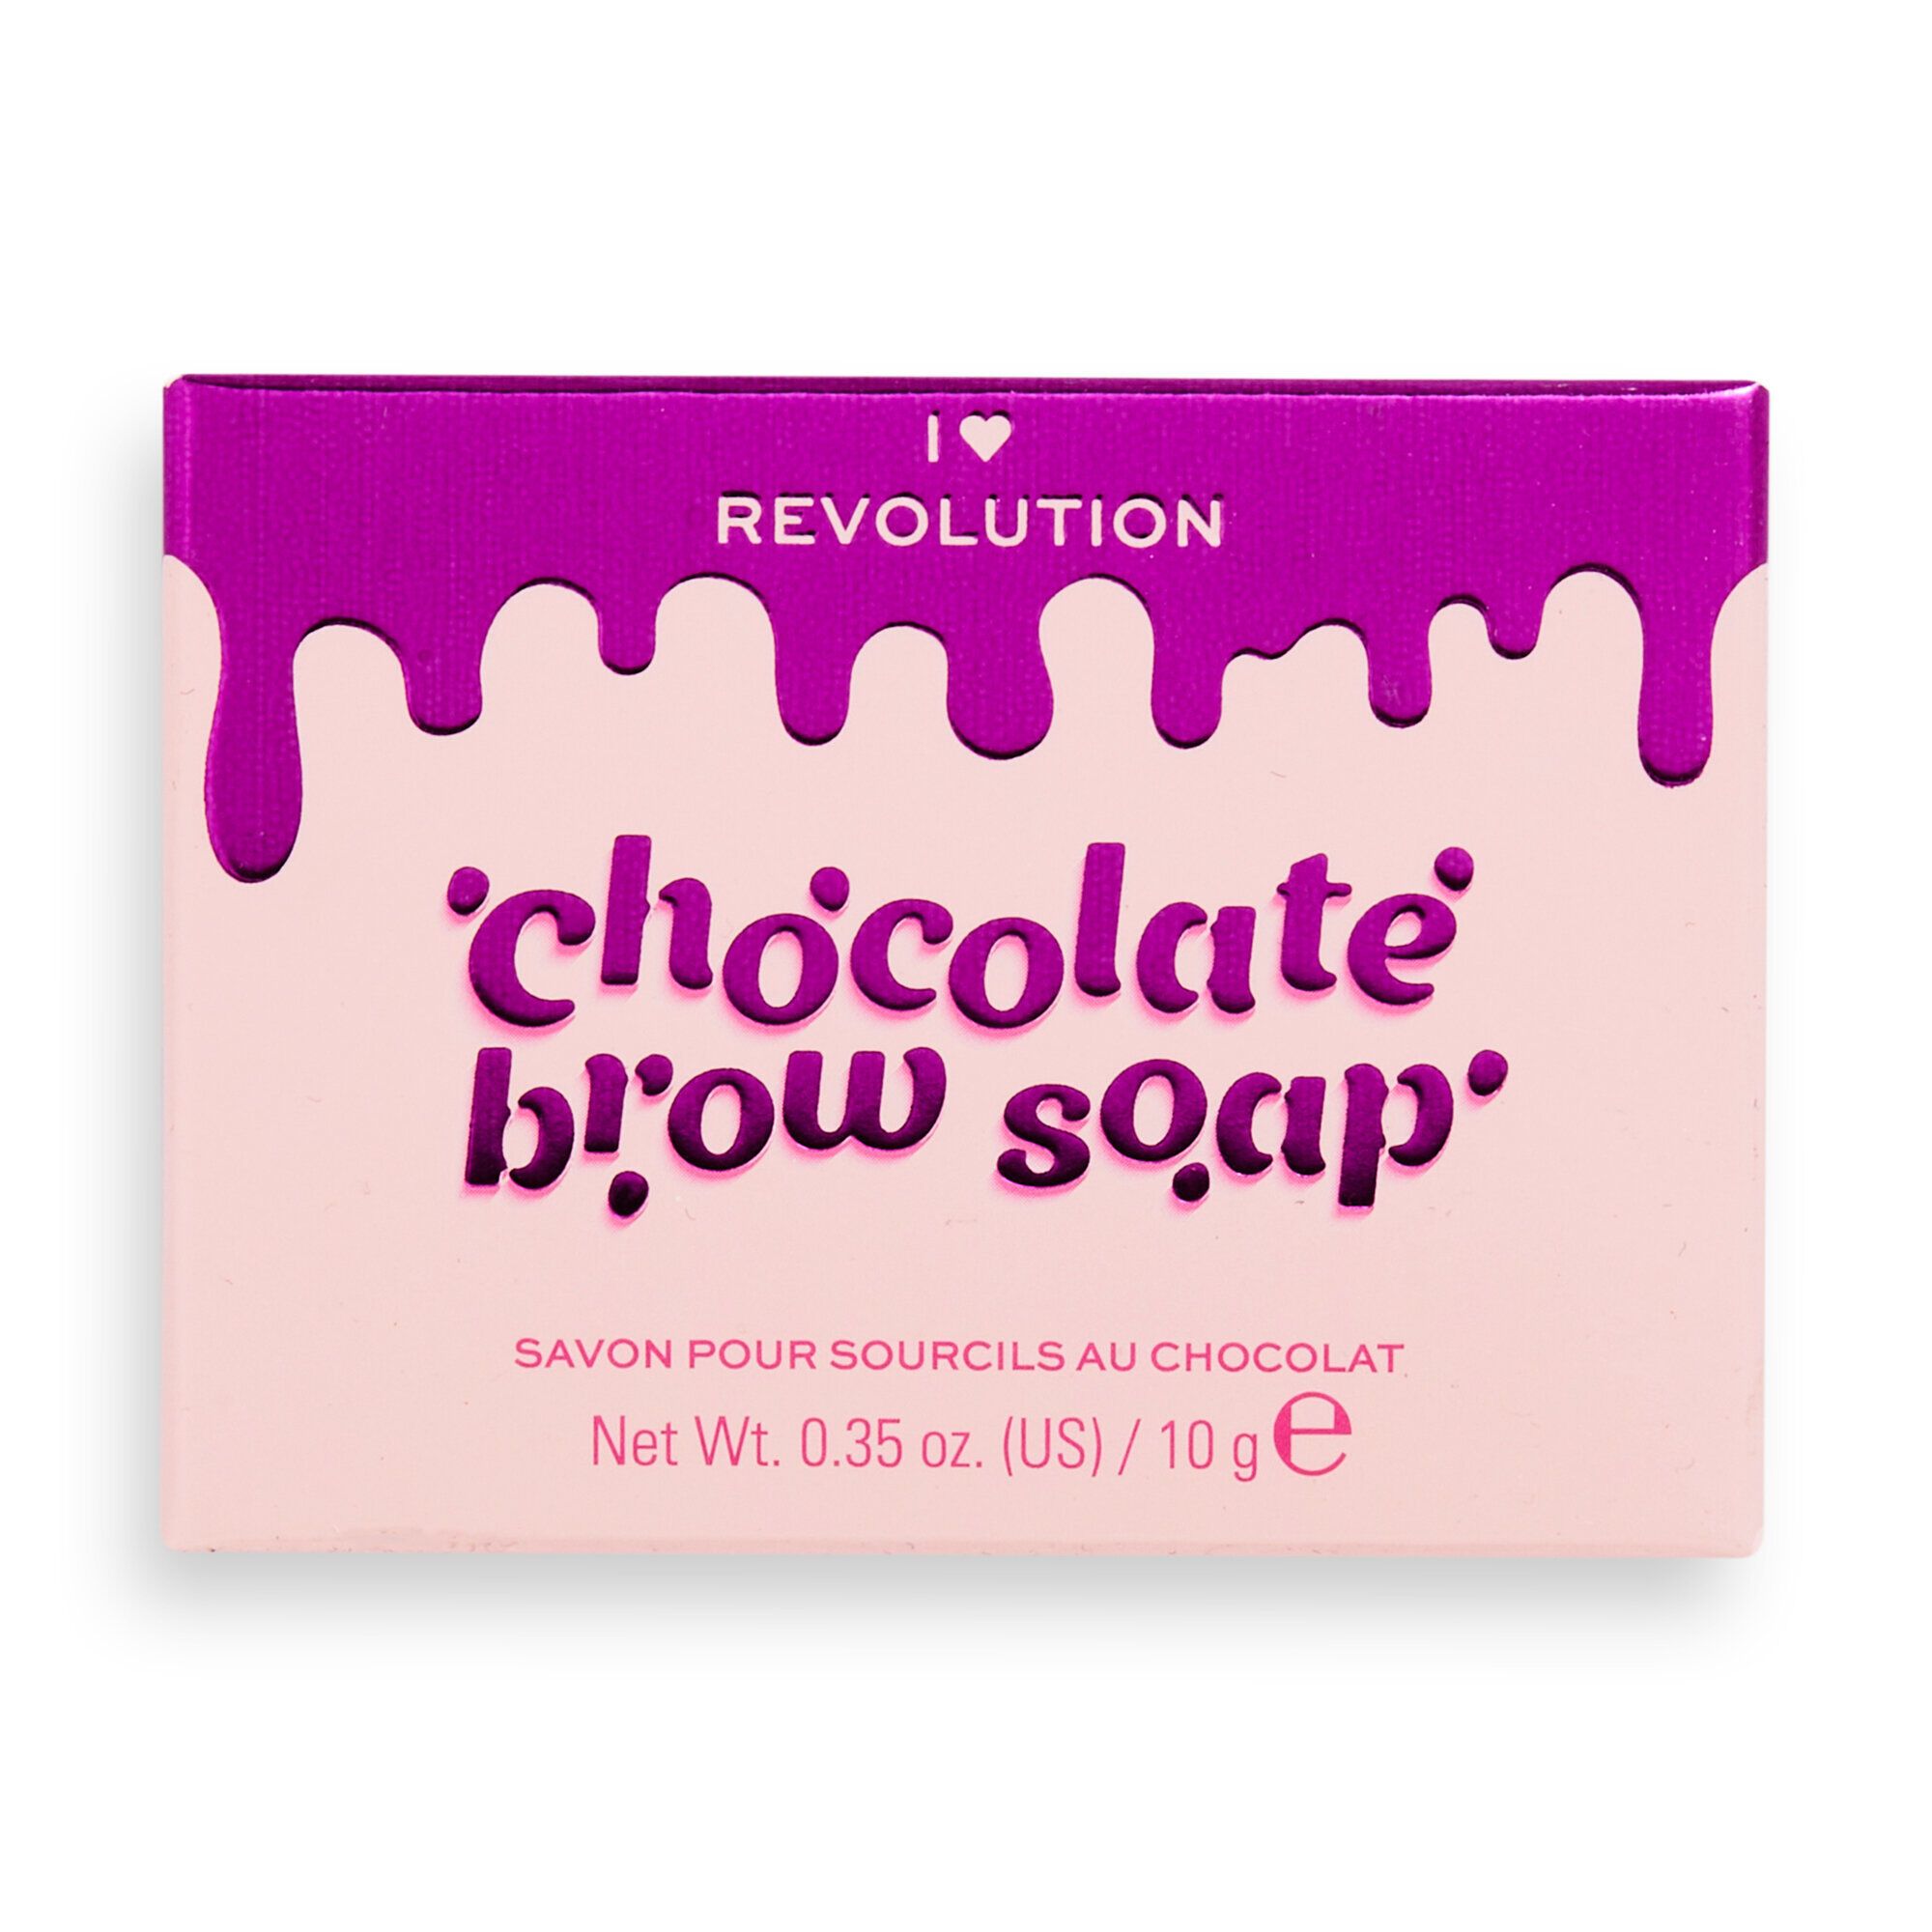 Chocolate Brow Soap